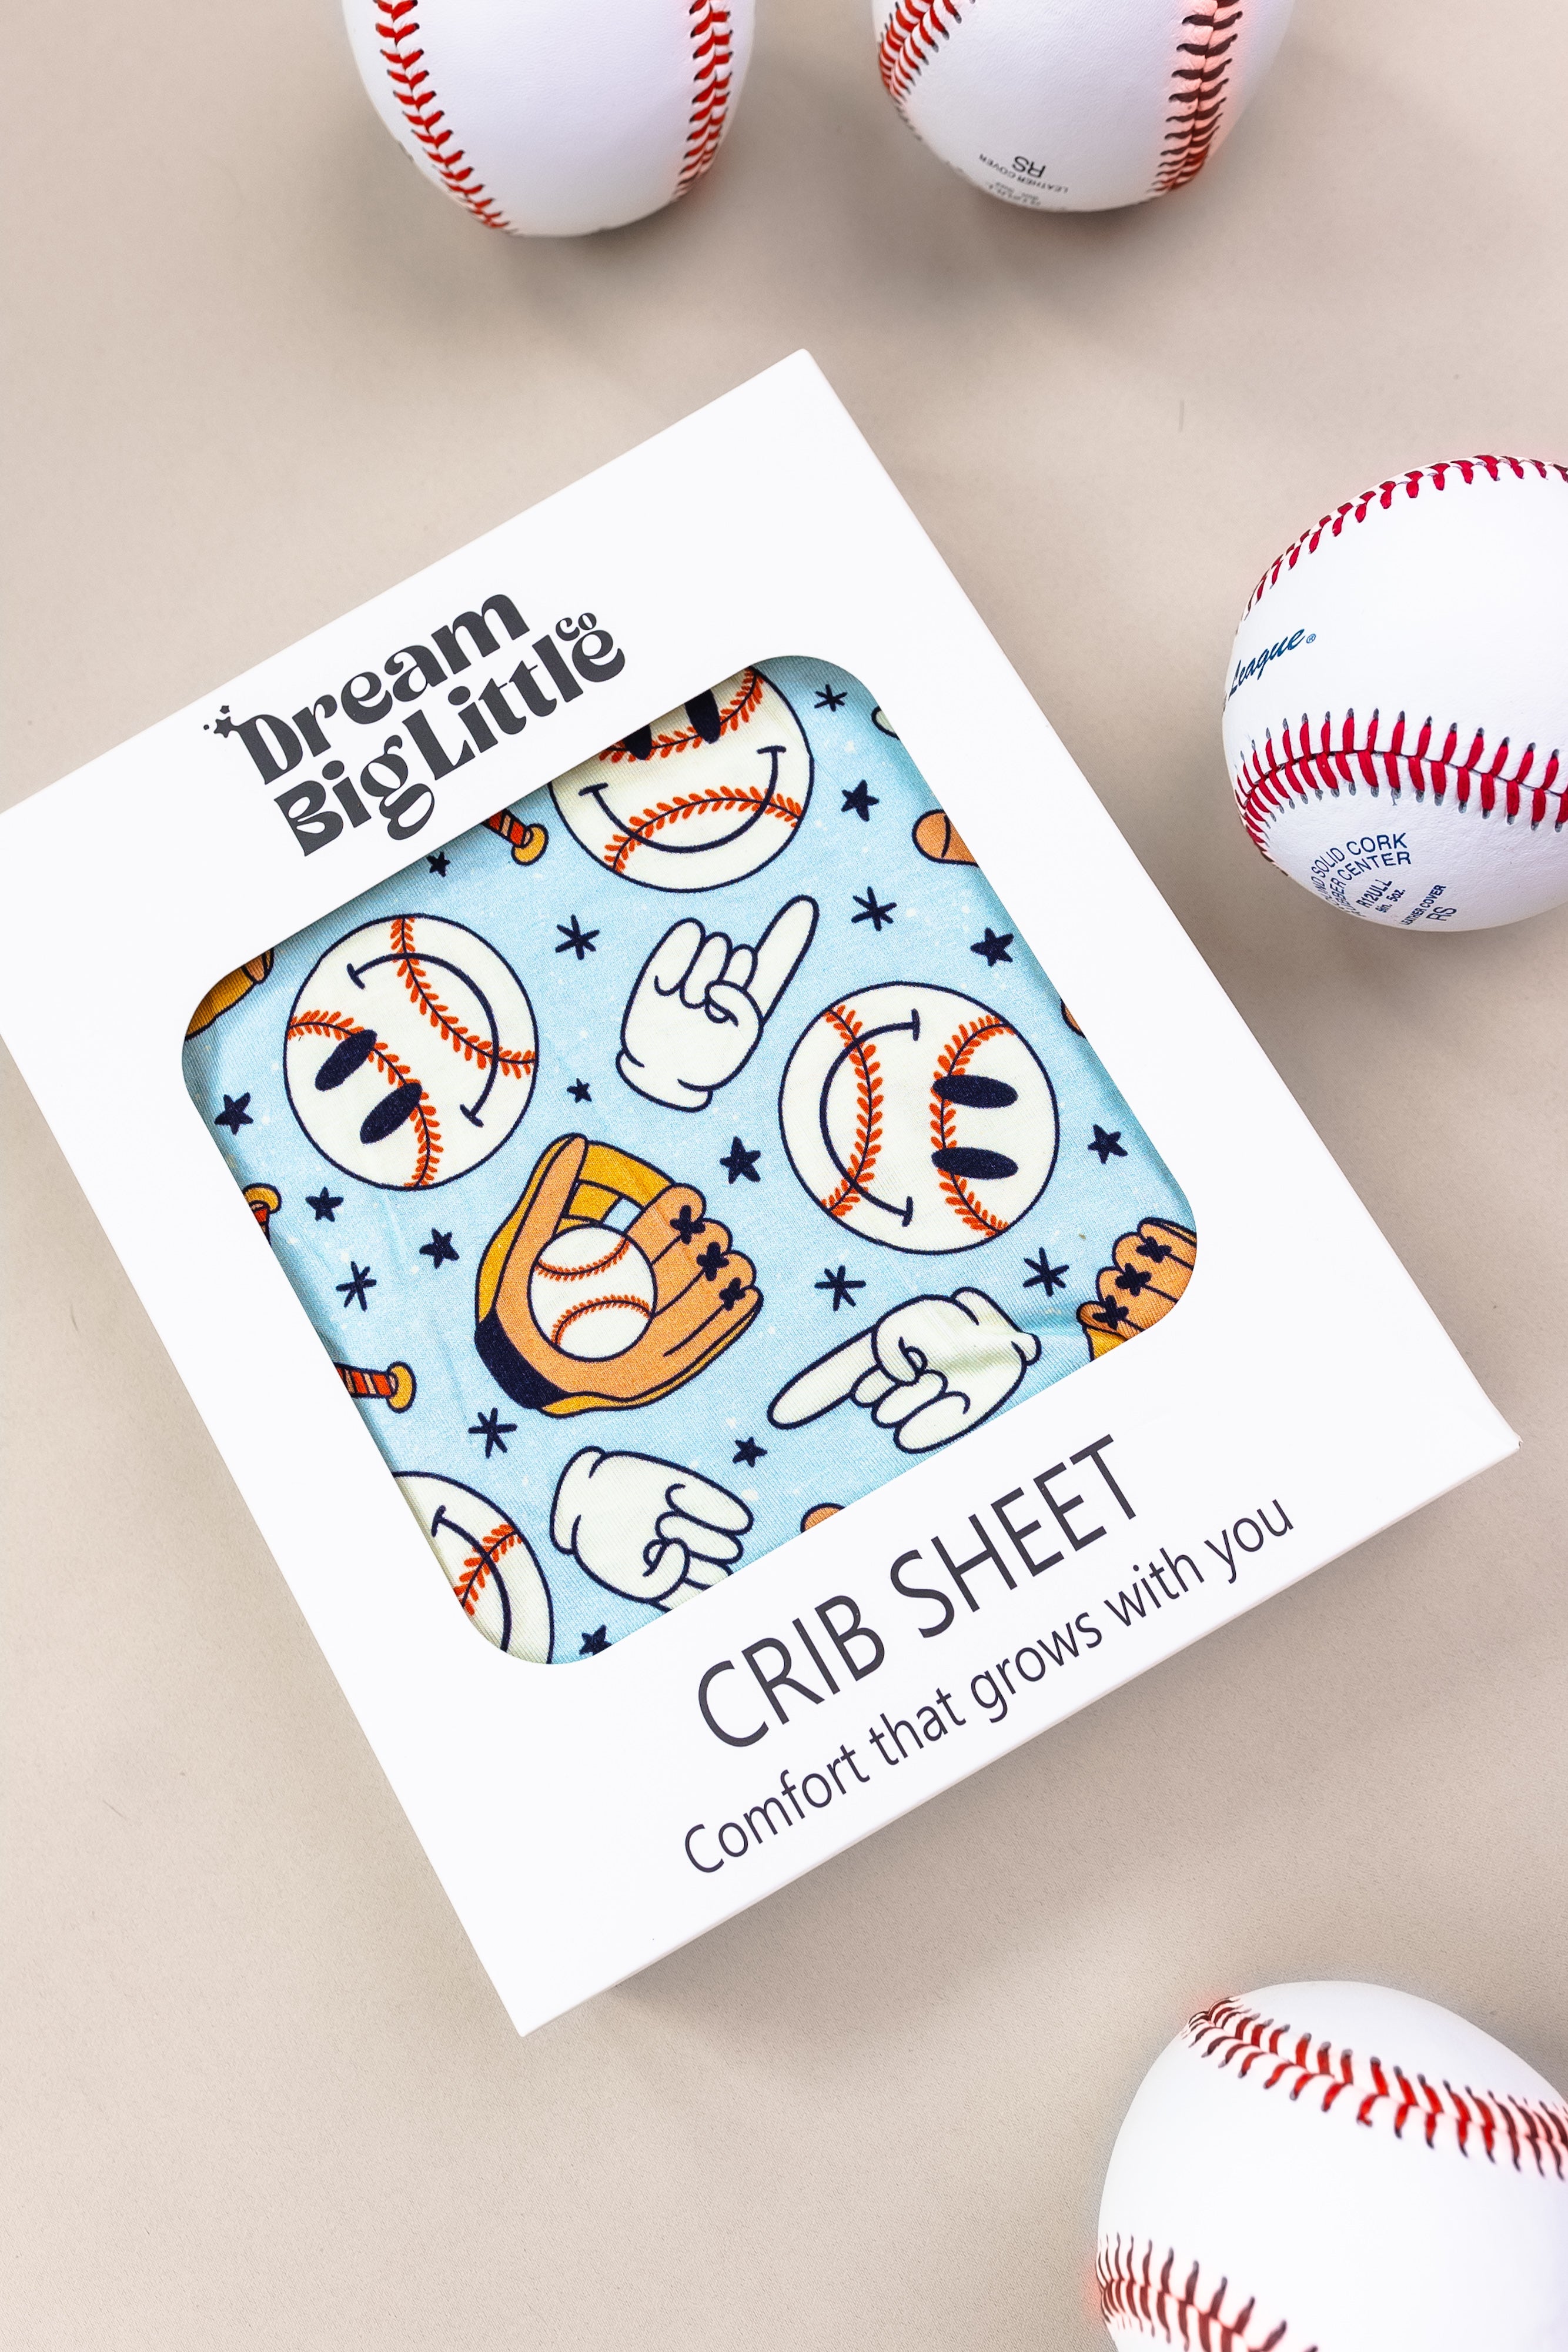 Baseball Smiley Dream Crib Sheet